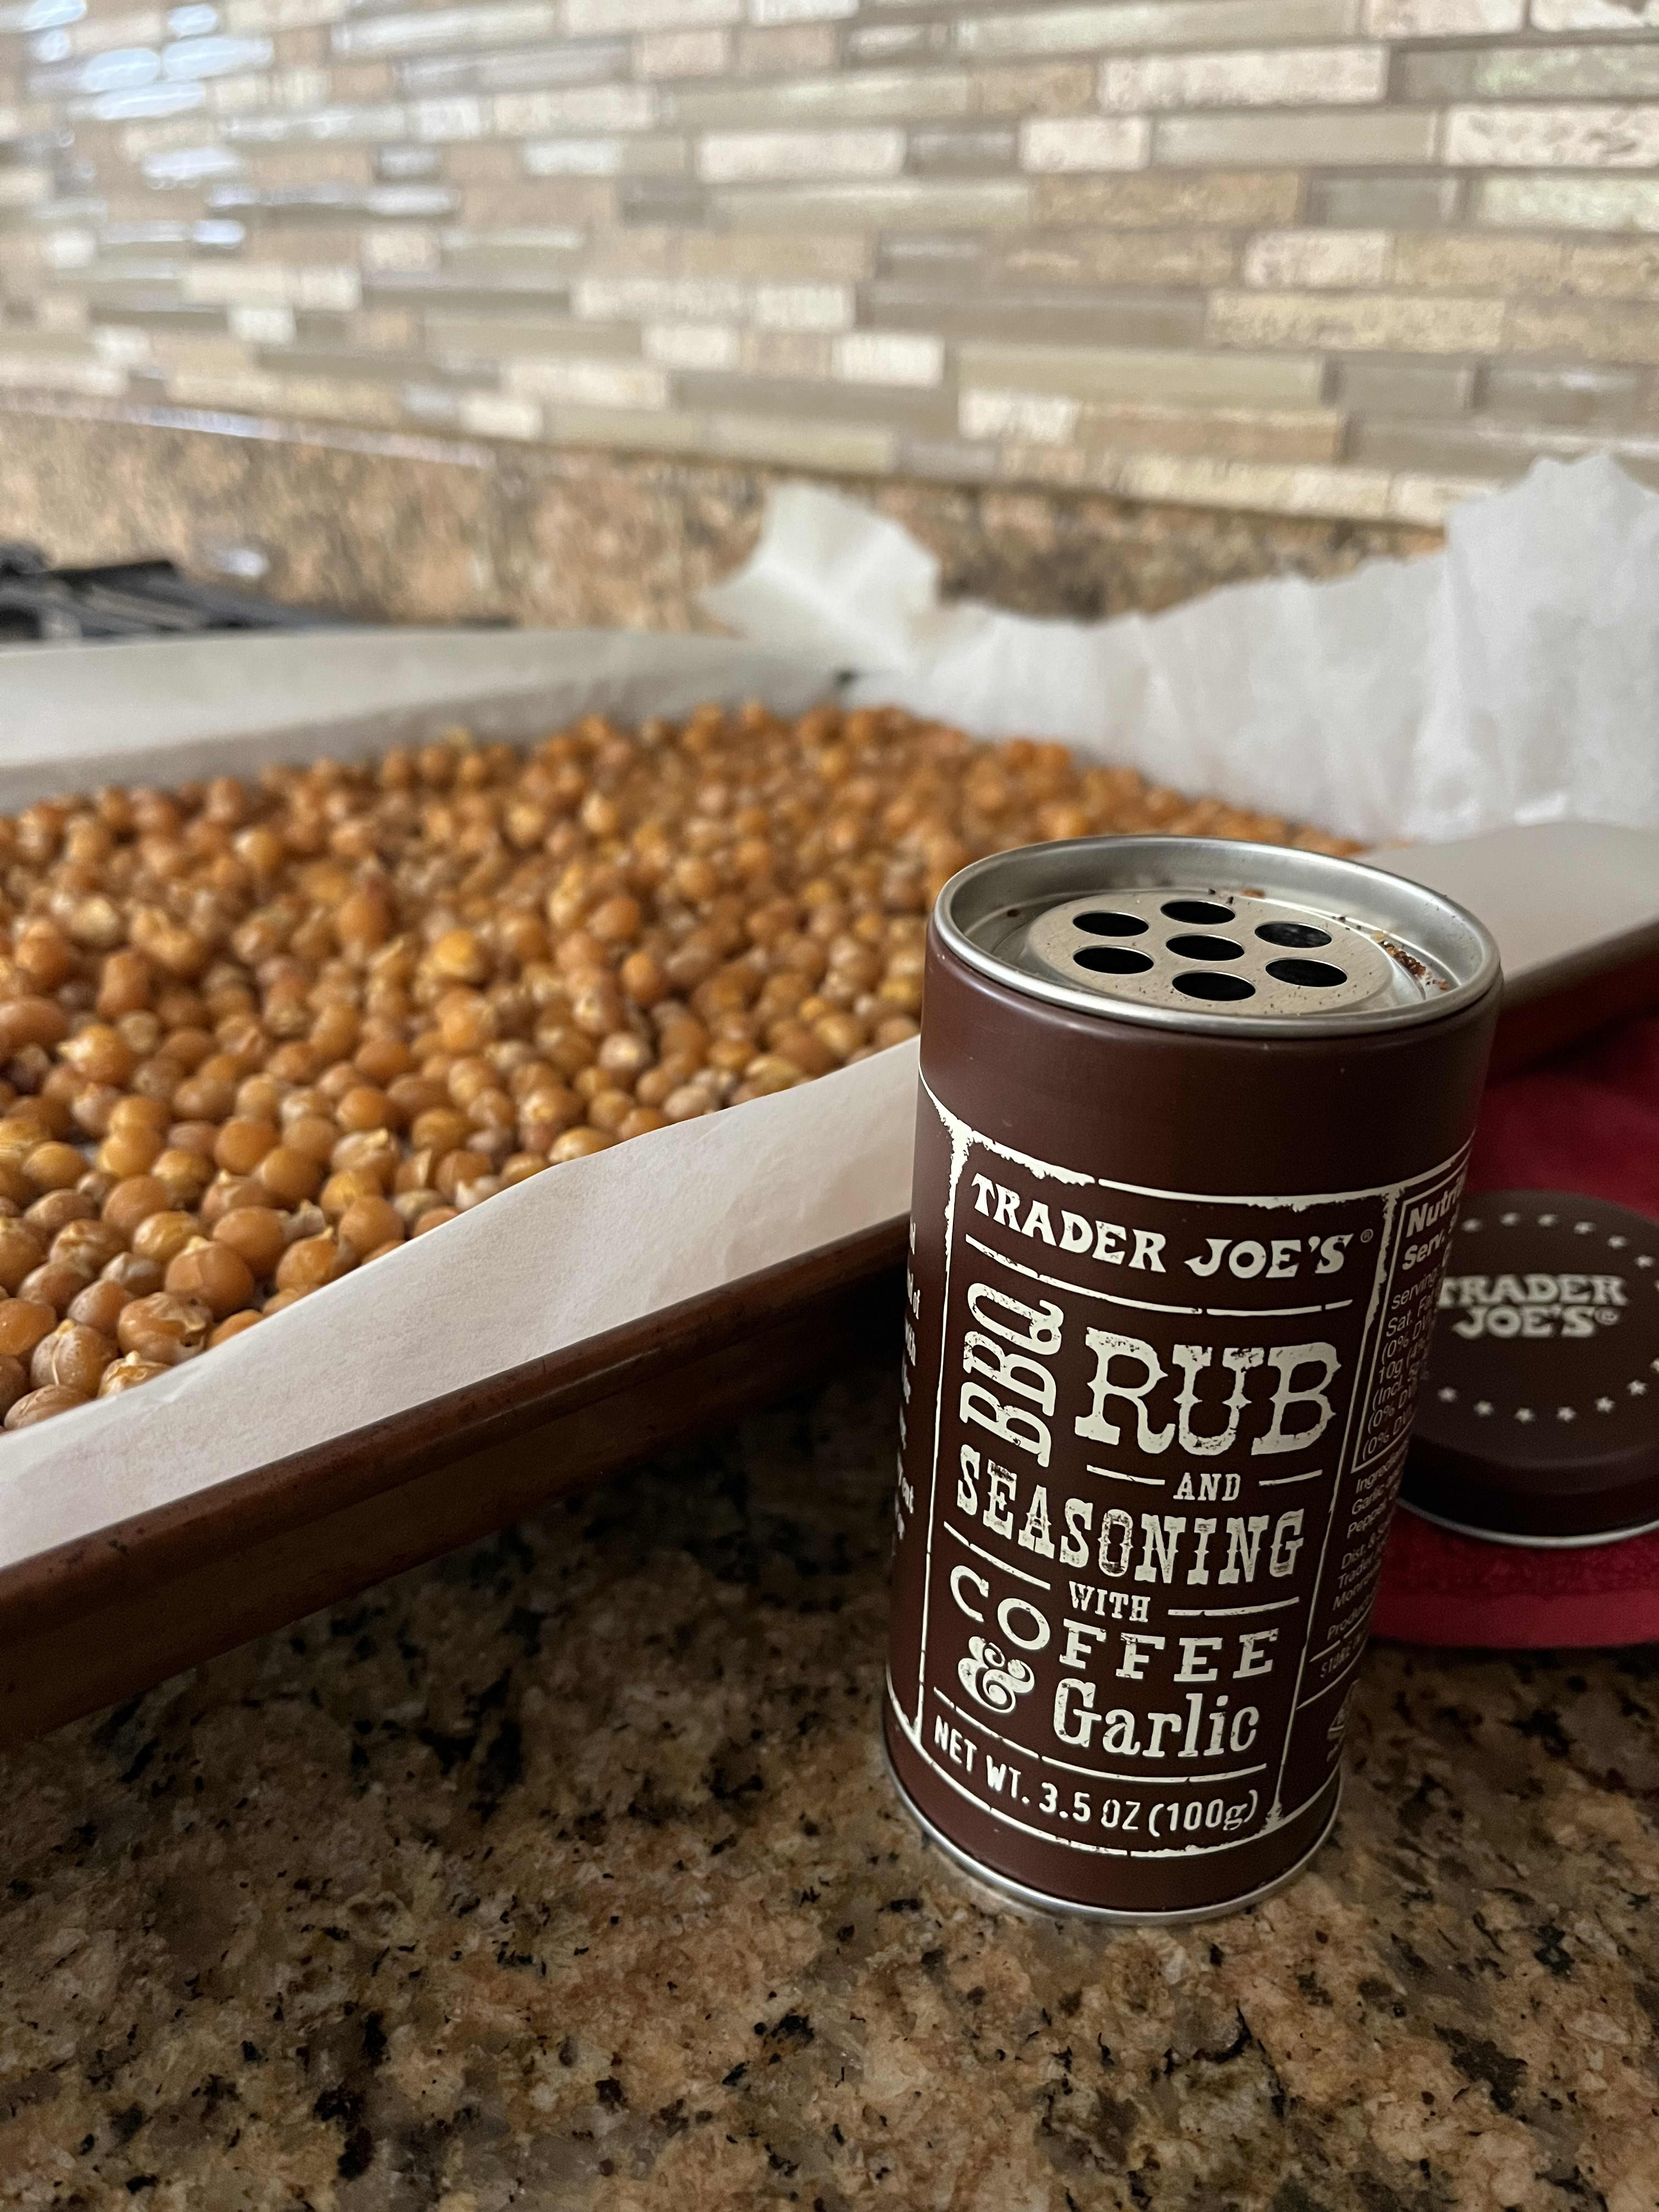 Trader Joe's BBQ Rub and Seasoning with Coffee and Garlic Review